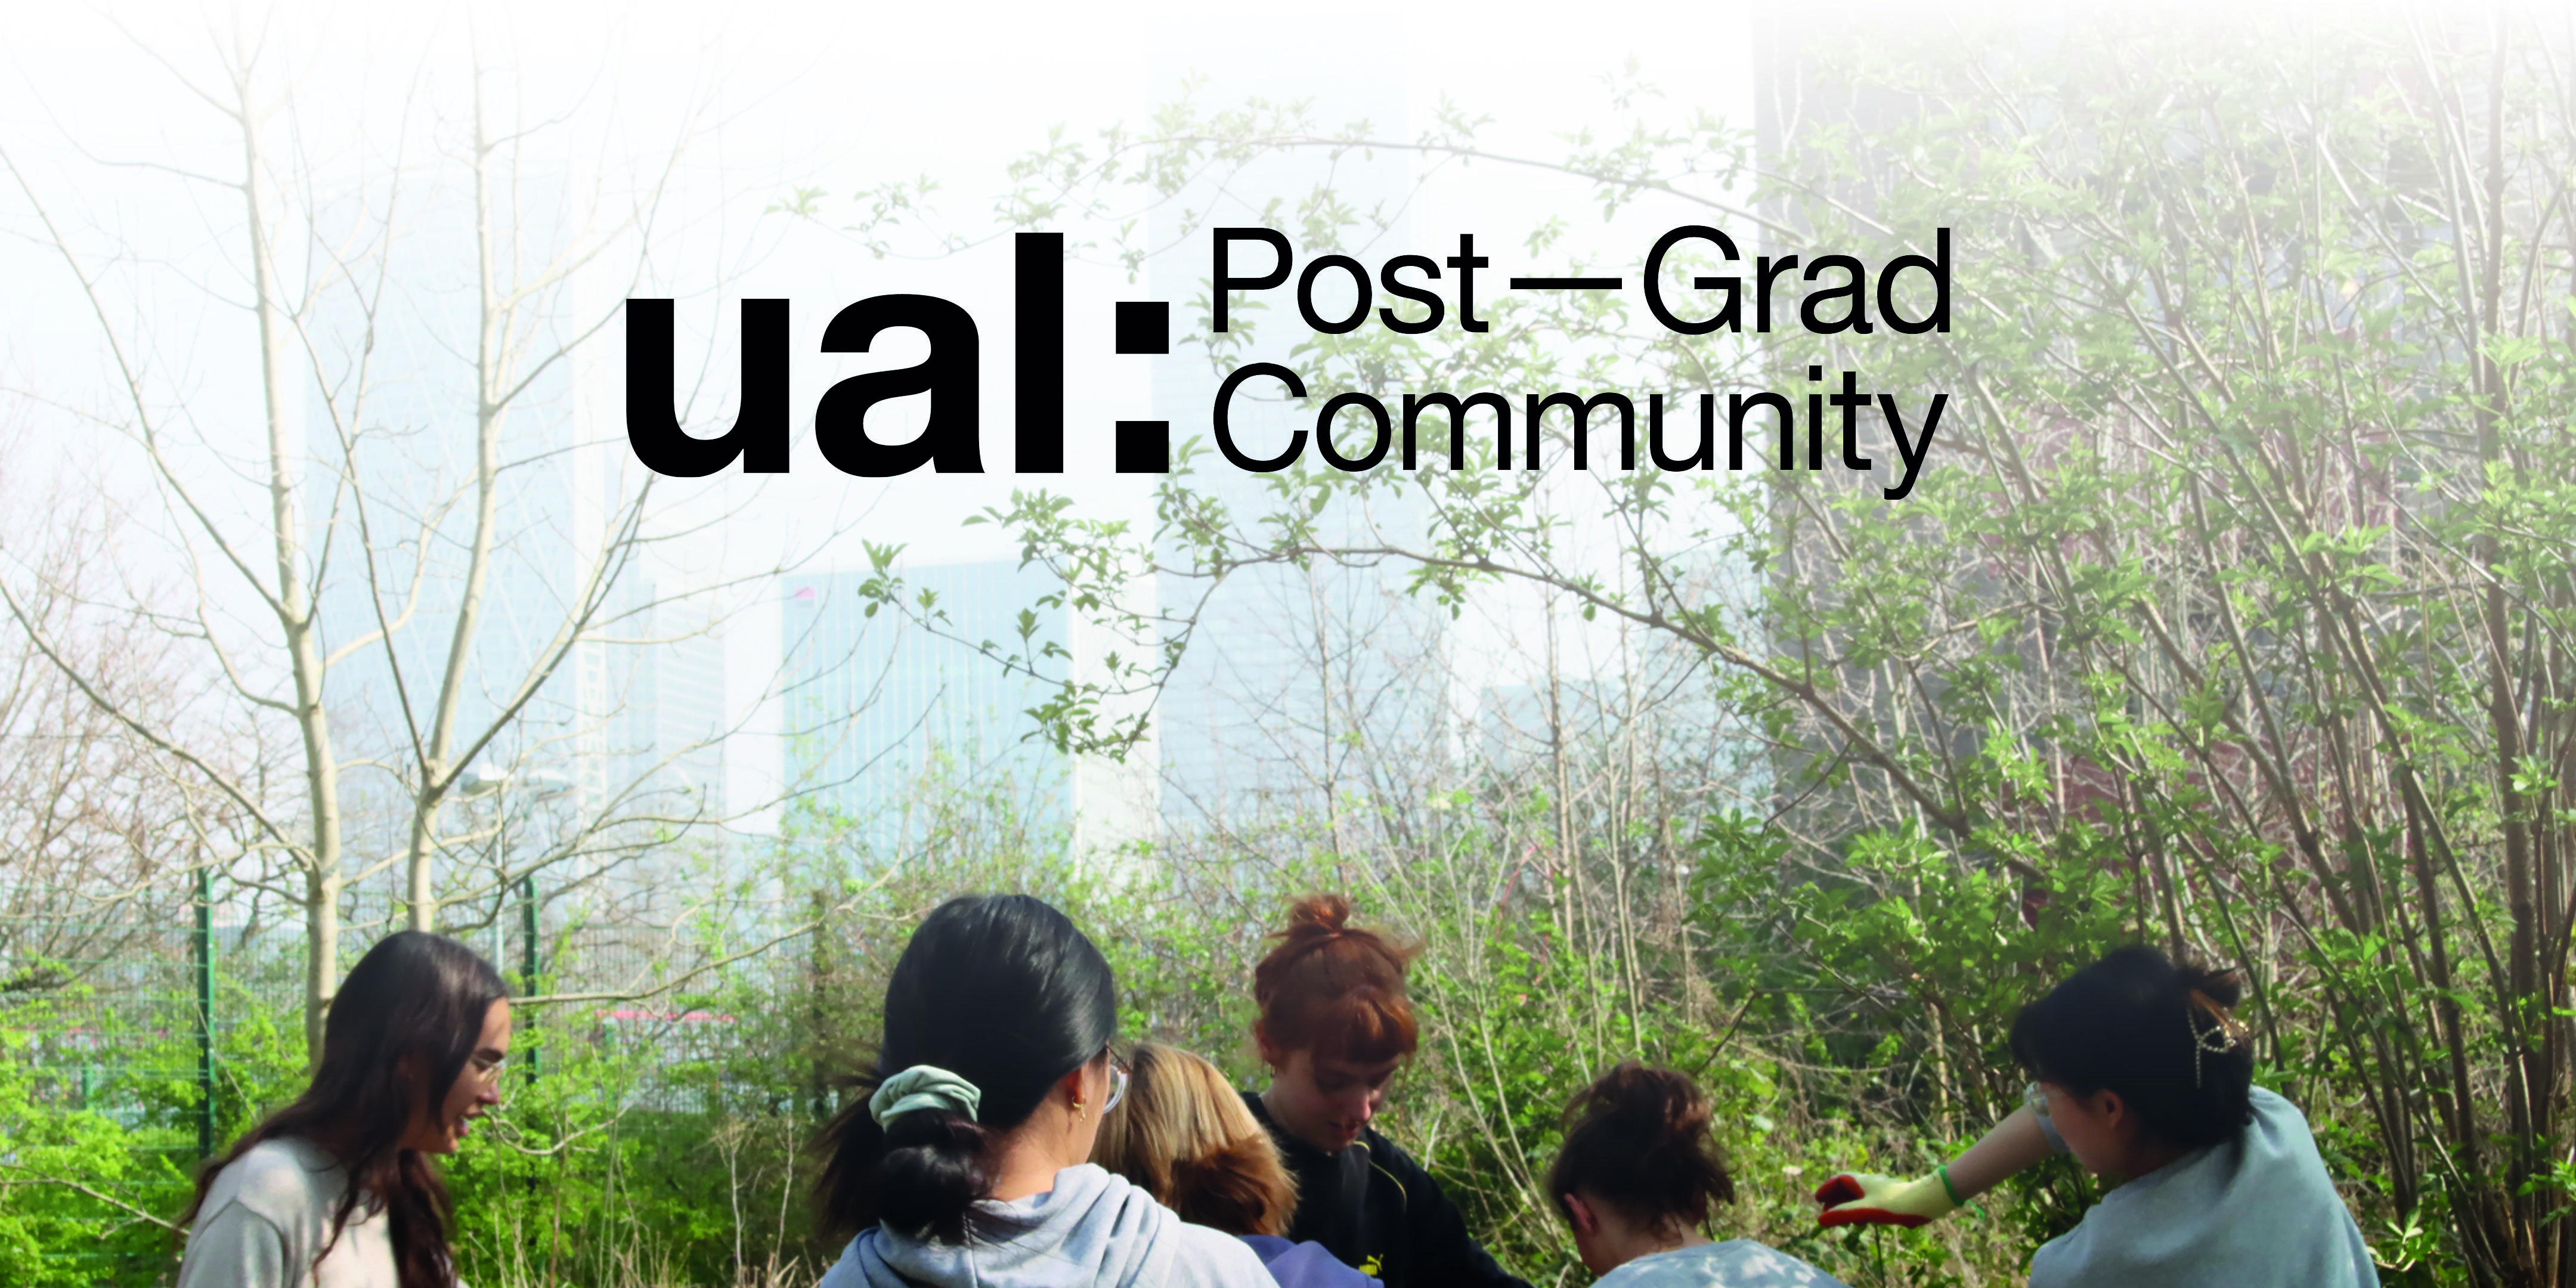 Big Welcome: Introducing Post-Grad Community